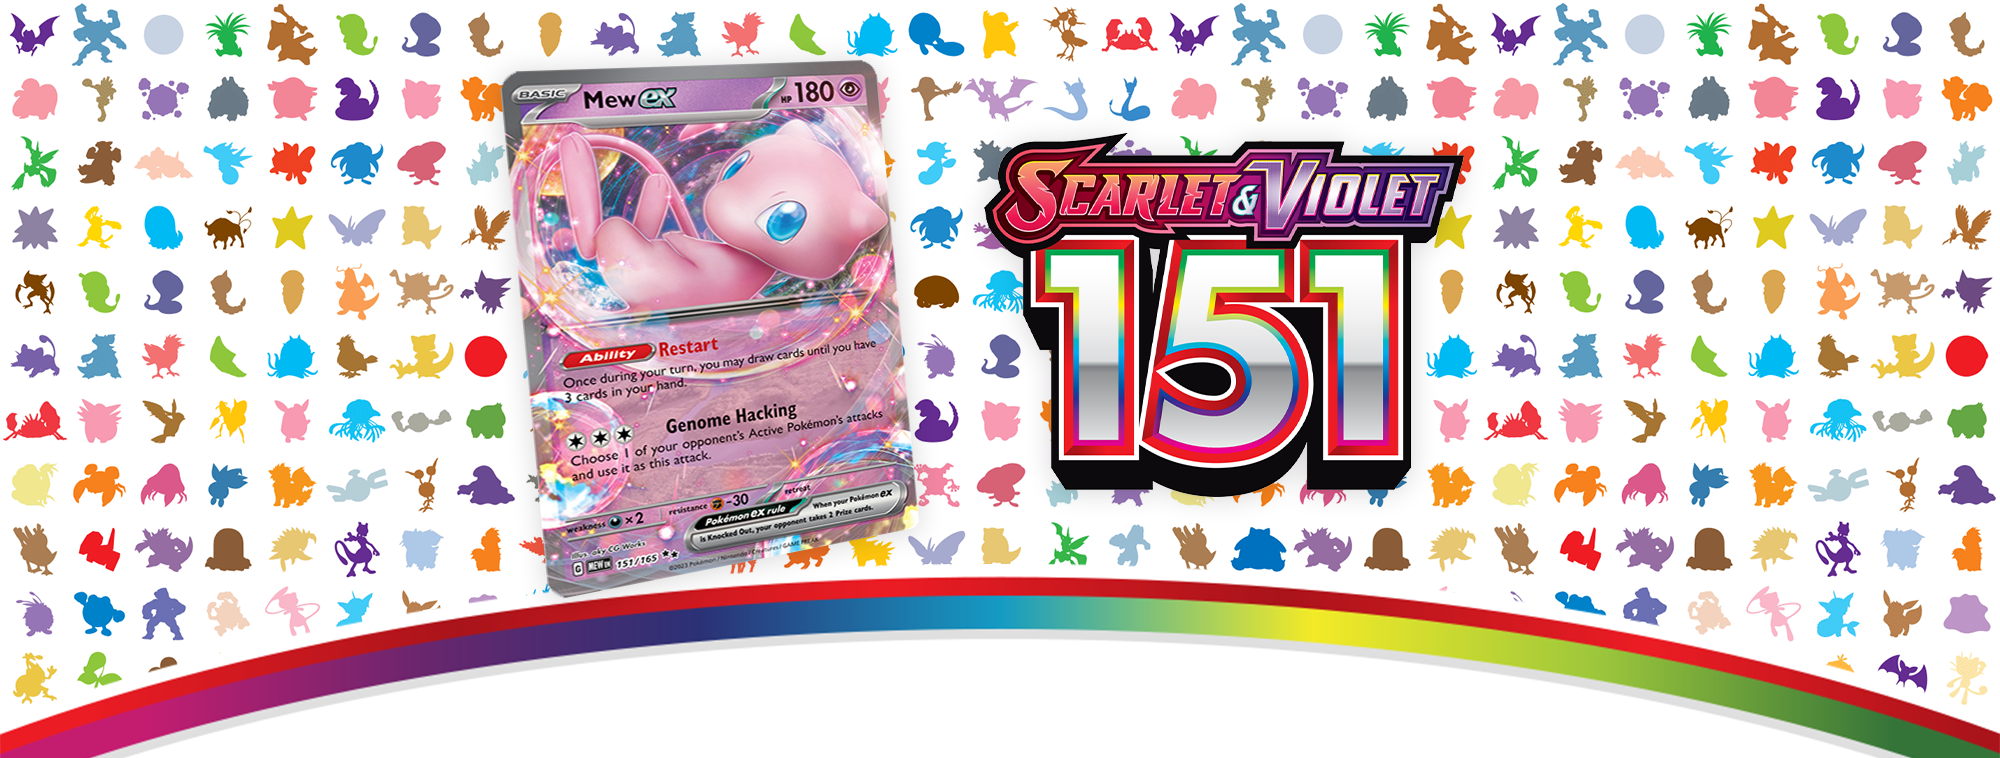 Pokémon TCG: Scarlet & Violet-151 Mini Tin (Kadabra & Hitmonlee)